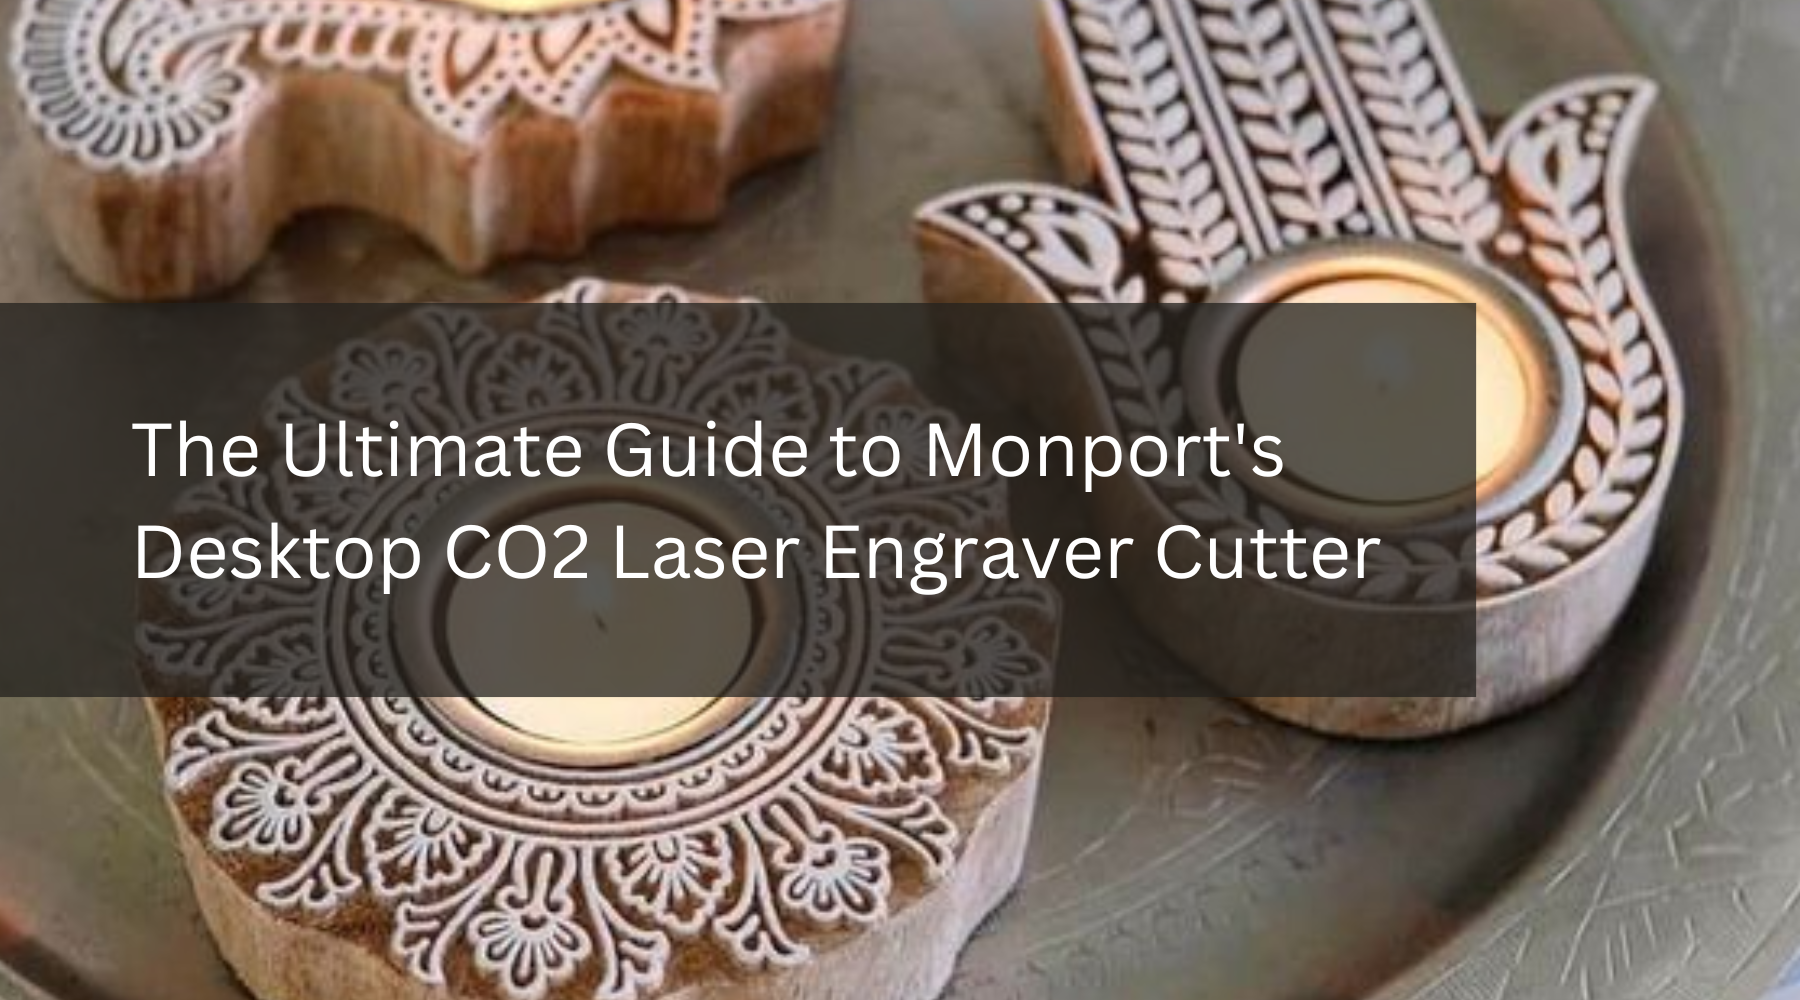 The Ultimate Guide to Monport's Desktop CO2 Laser Engraver Cutter